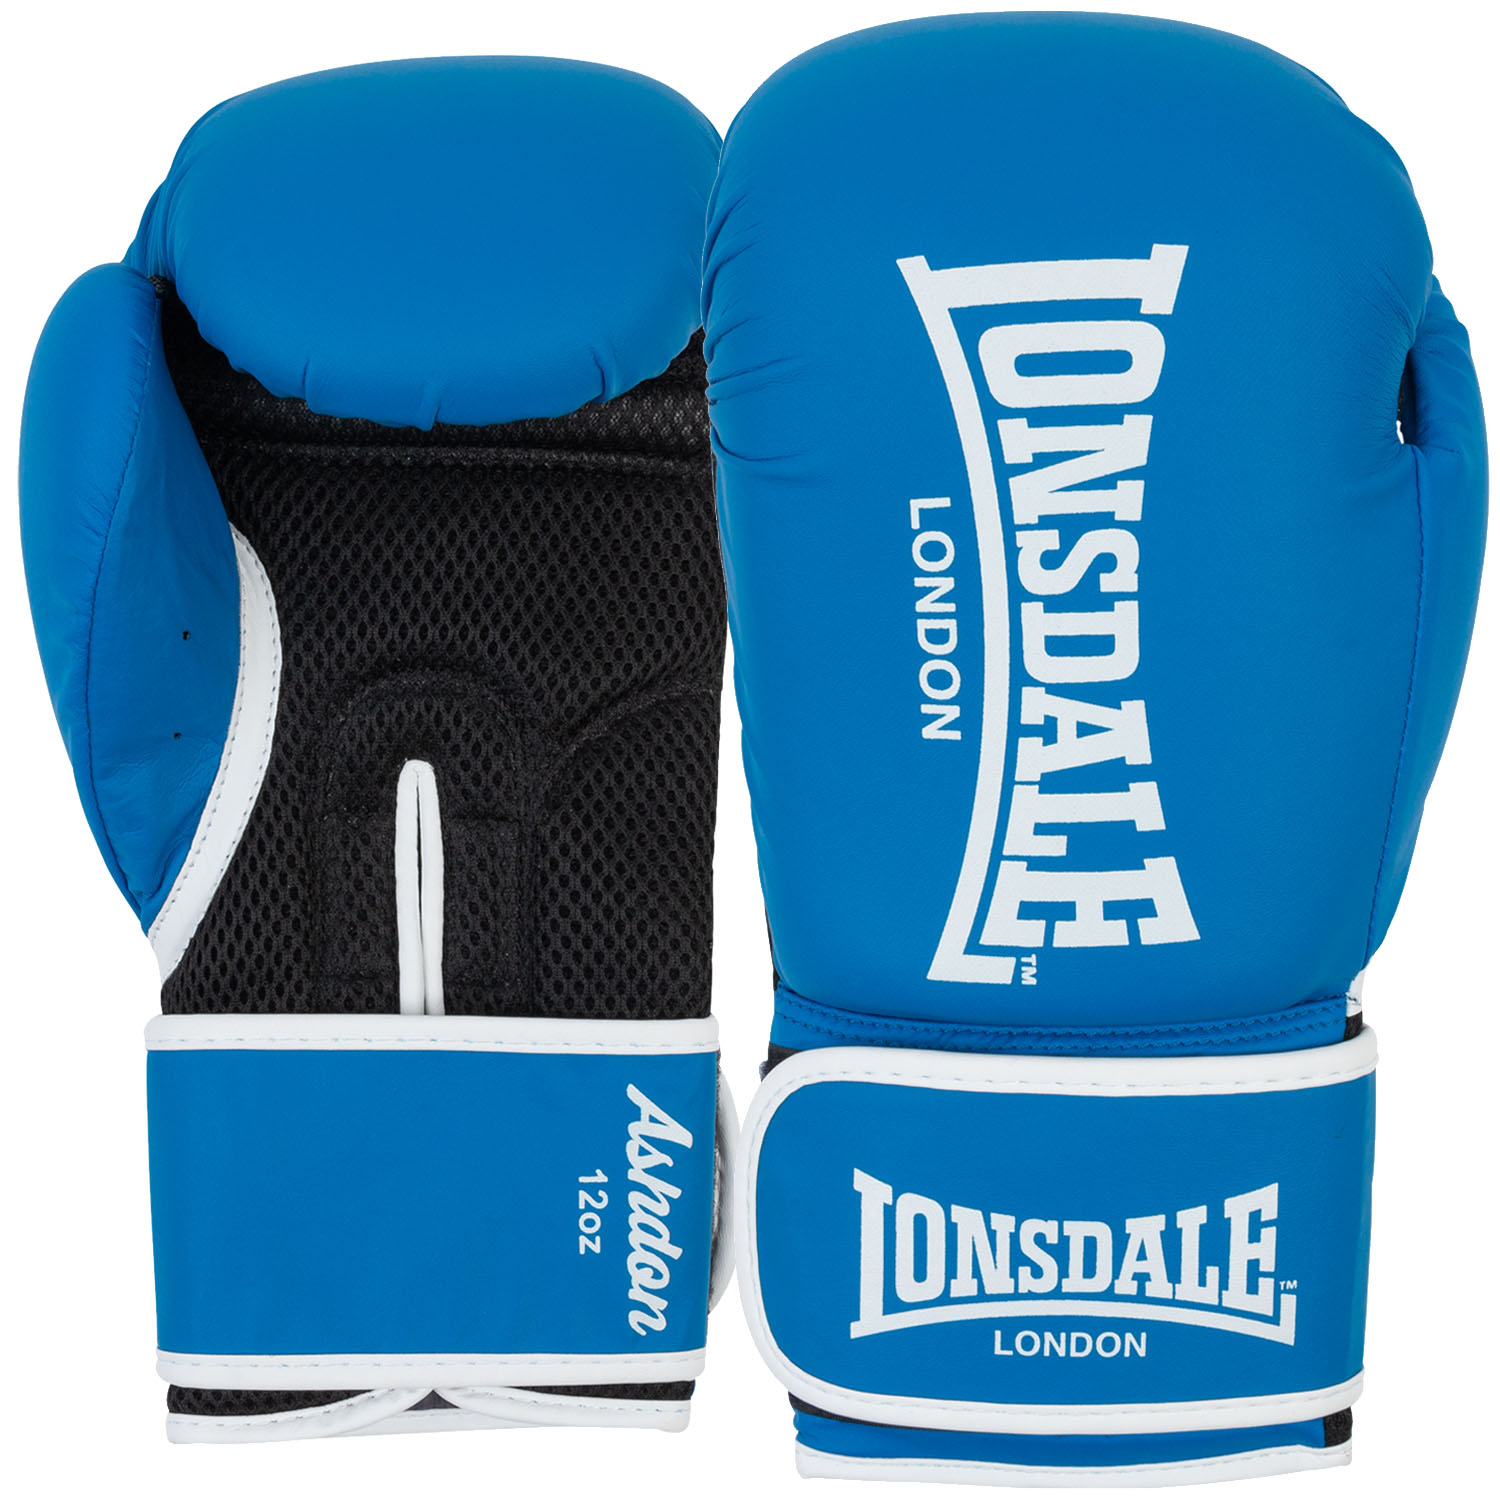 Lonsdale Boxhandschuhe, Ashdon, blau-weiß, 12 Oz